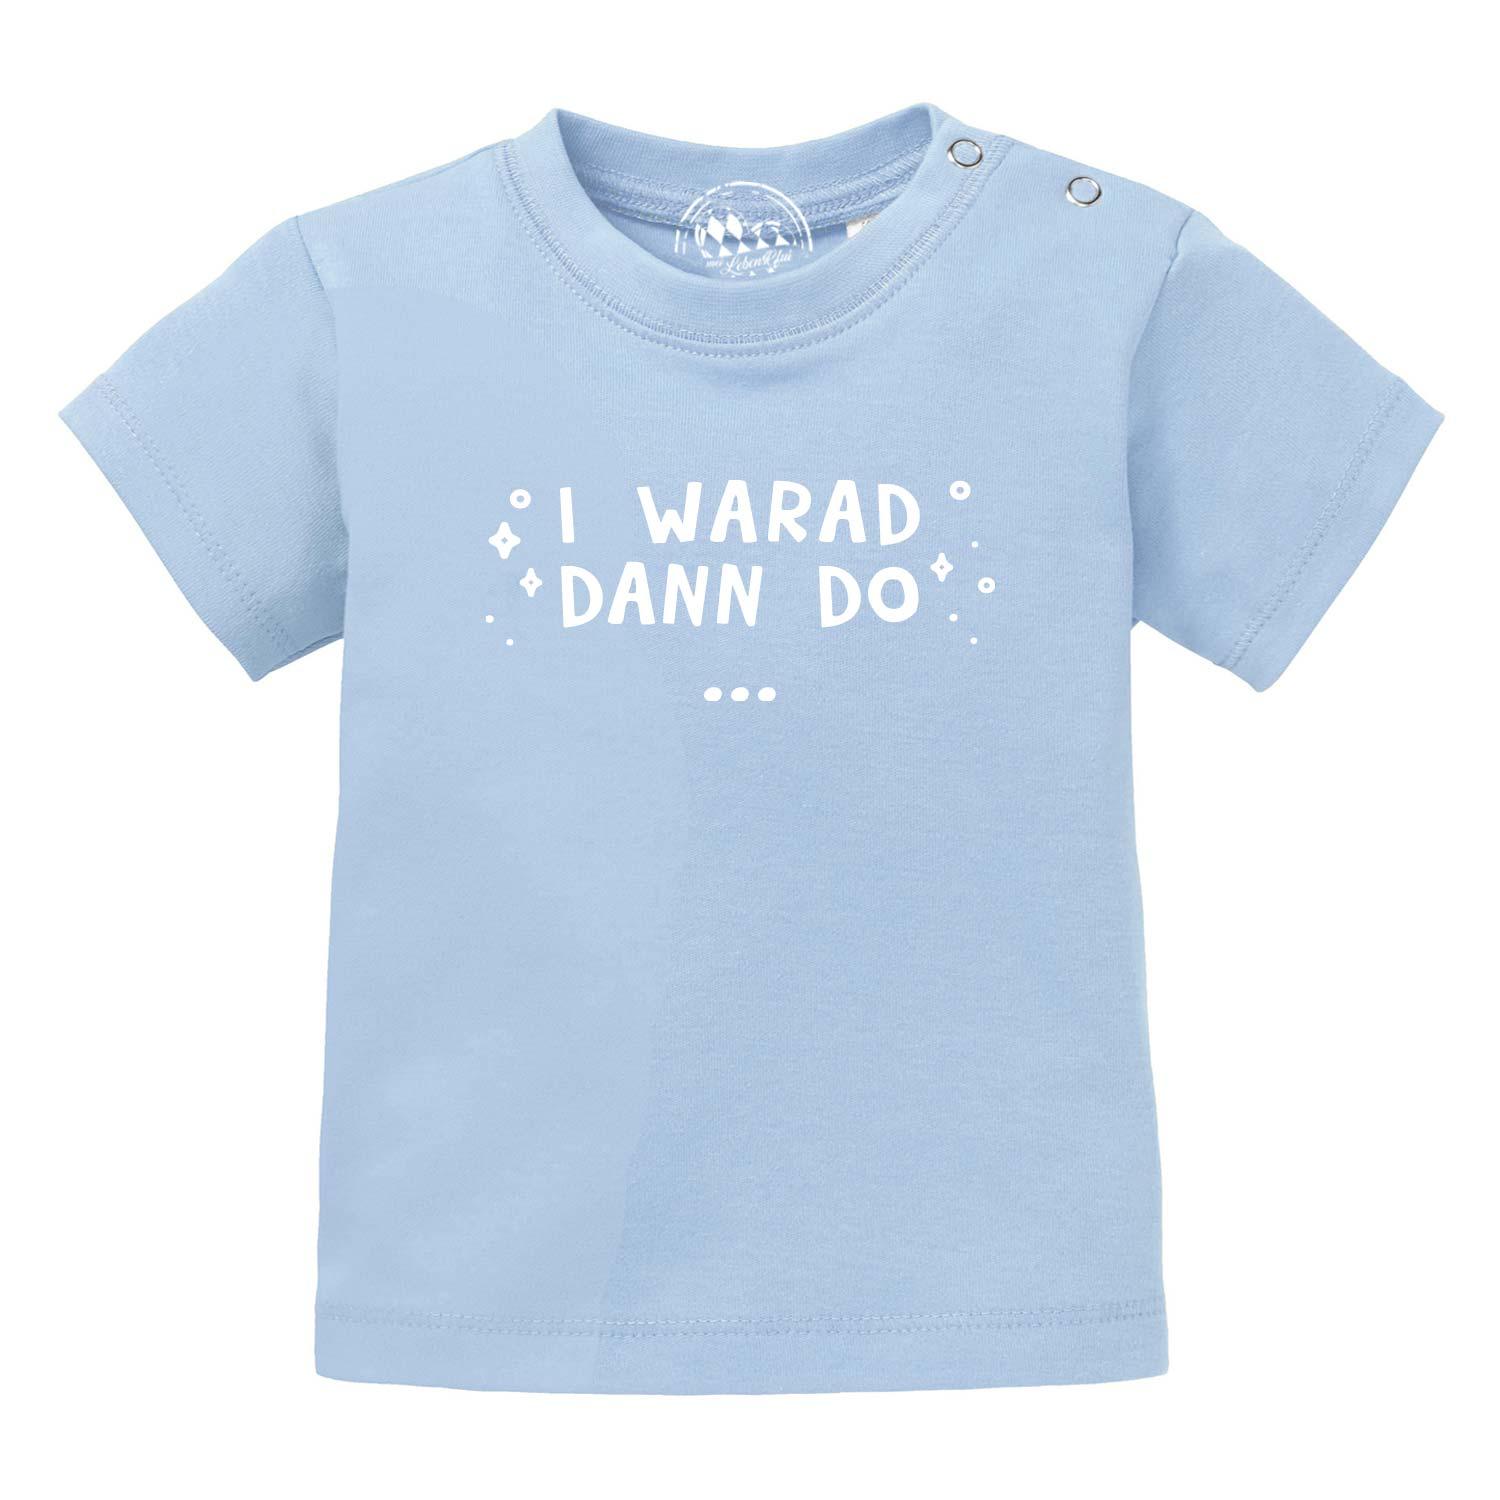 Baby T-Shirt "I warad dann do" - bavariashop - mei LebensGfui